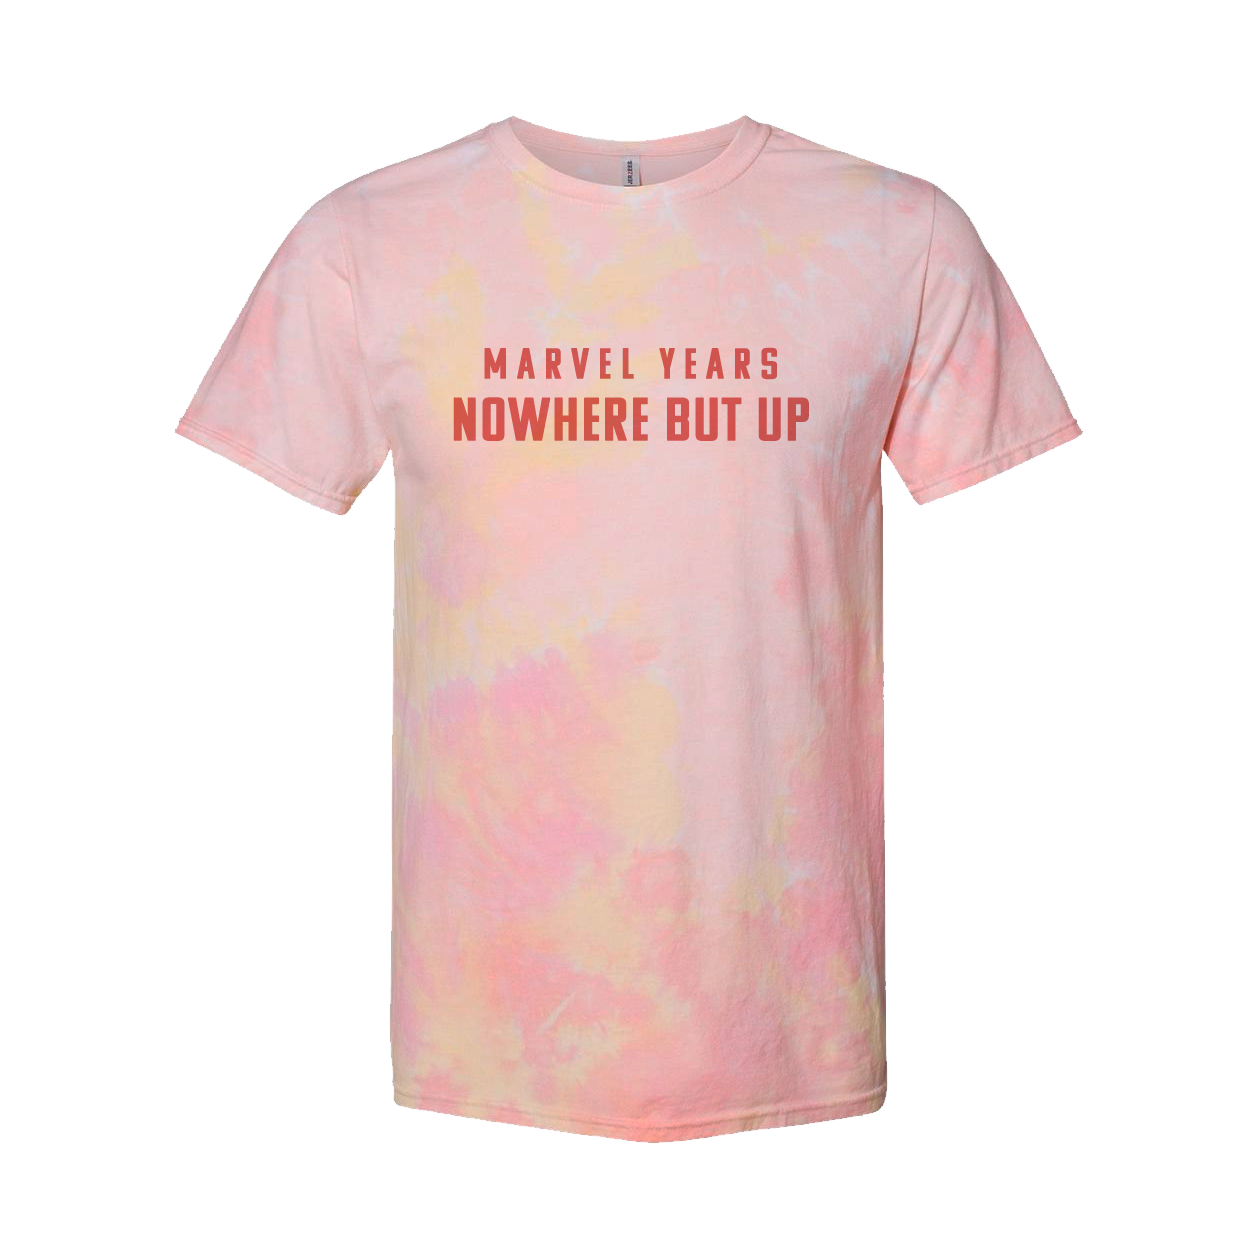 Nowhere But Up EP - T-Shirt (10 Year Anniversary)